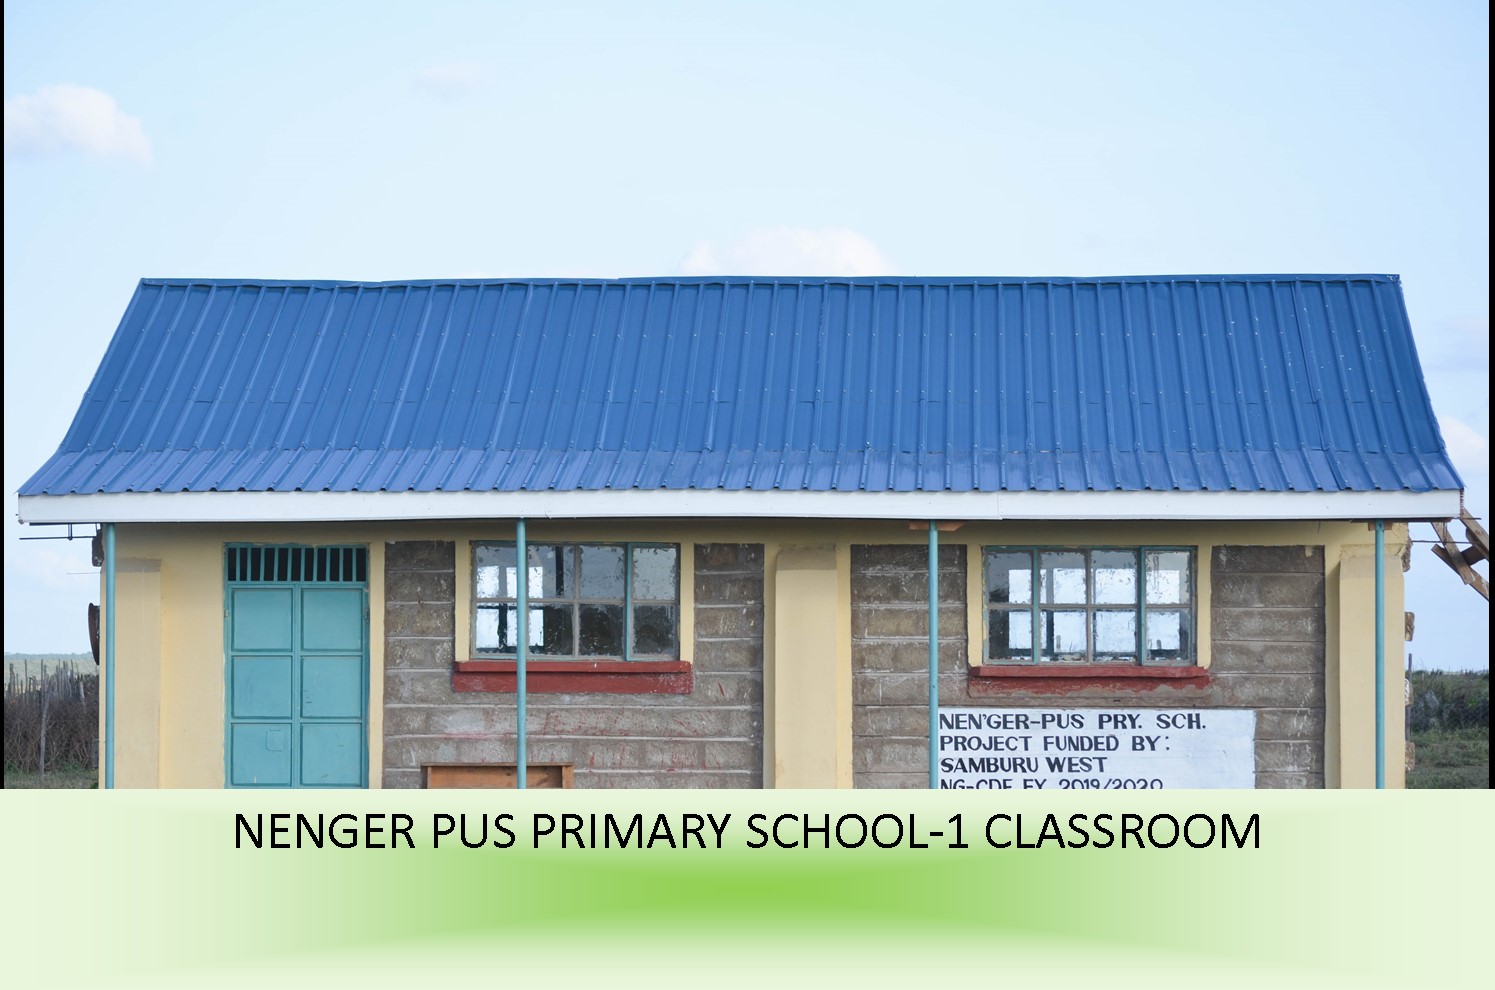 https://samburu-west.ngcdf.go.ke/wp-content/uploads/2021/08/nenger-pus-primary-school-1-classroom.jpg